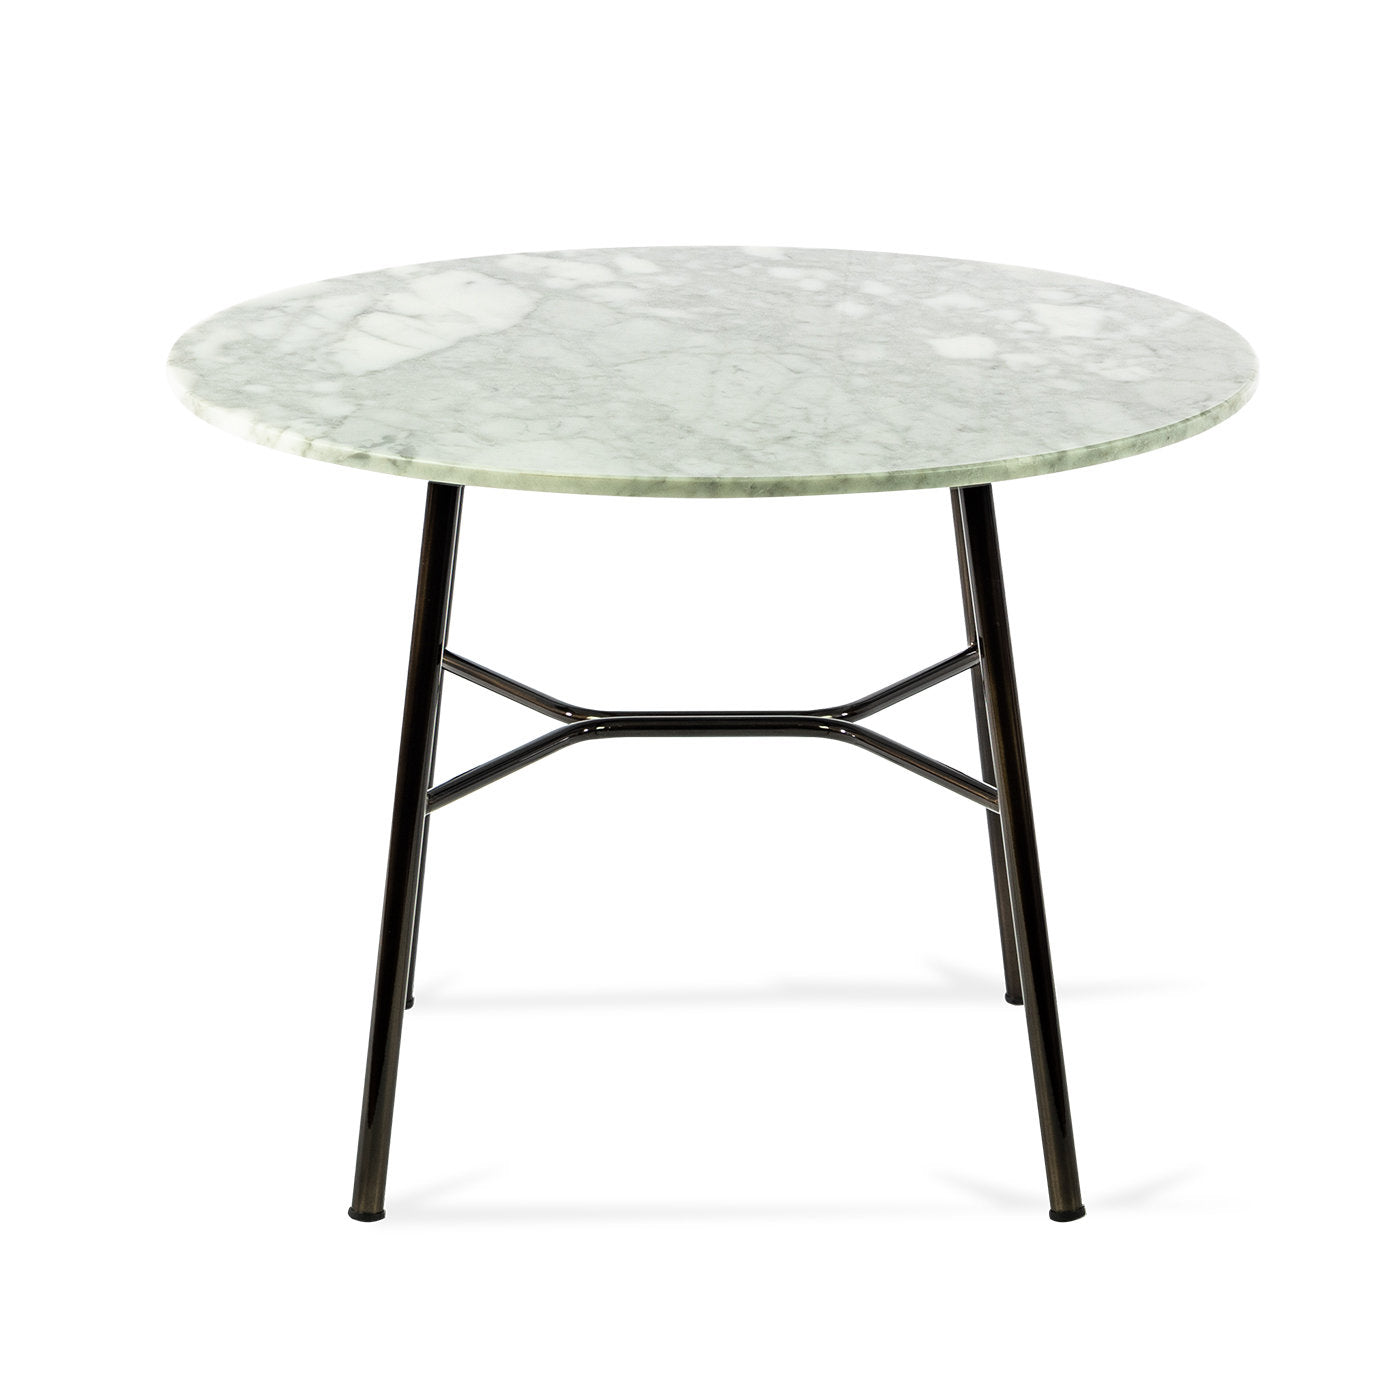 Yuki Round Side Table with White Carrara Top # 1 by Ep Studio - Alternative view 1